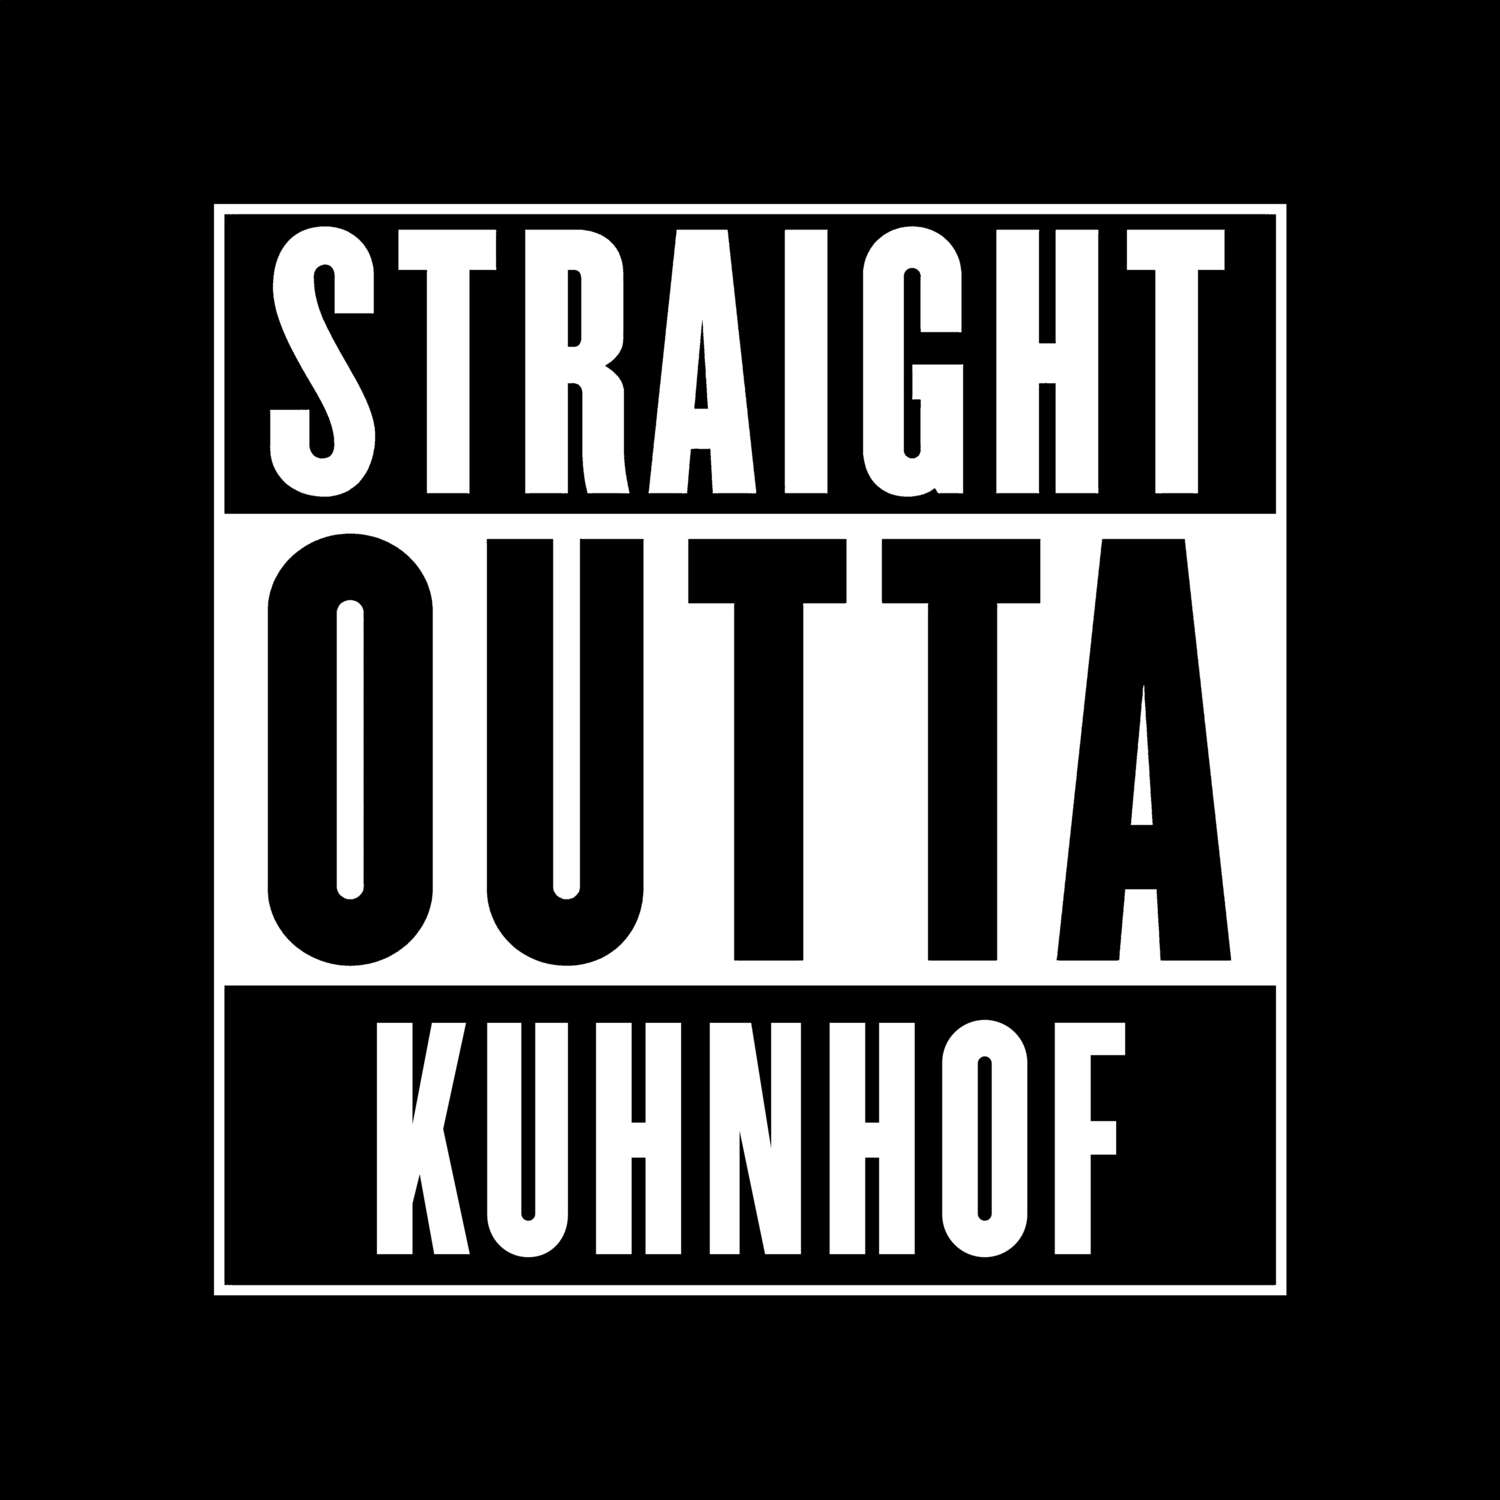 Kuhnhof T-Shirt »Straight Outta«